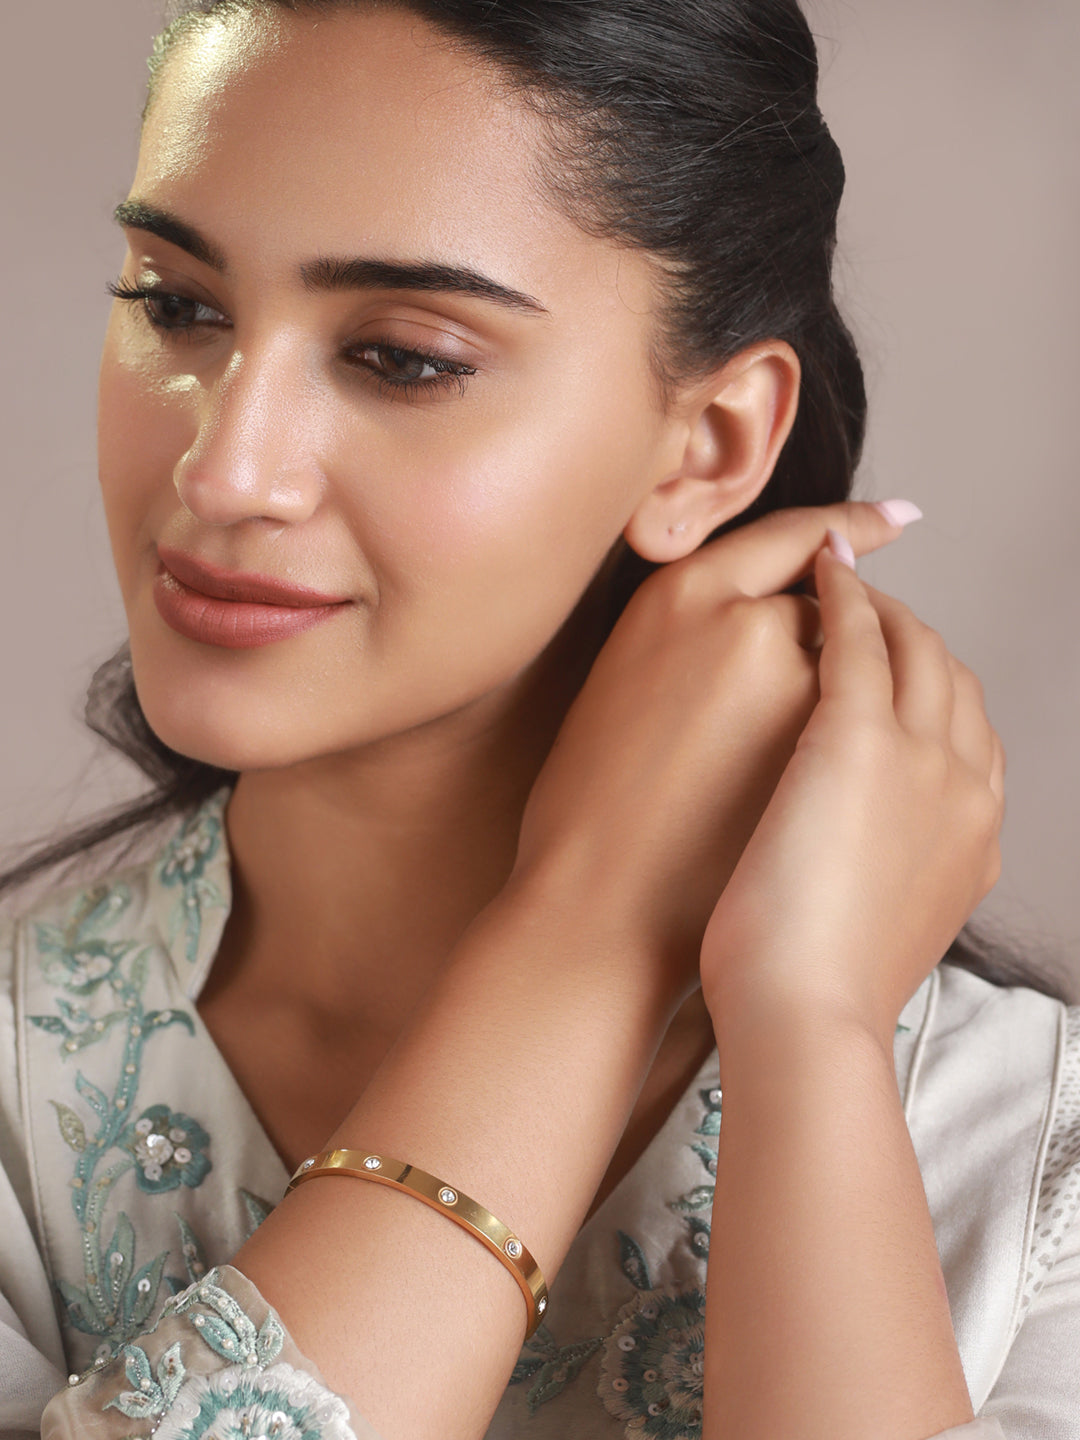 Priyaasi Minimal Solid Studded Gold-Plated Bracelet